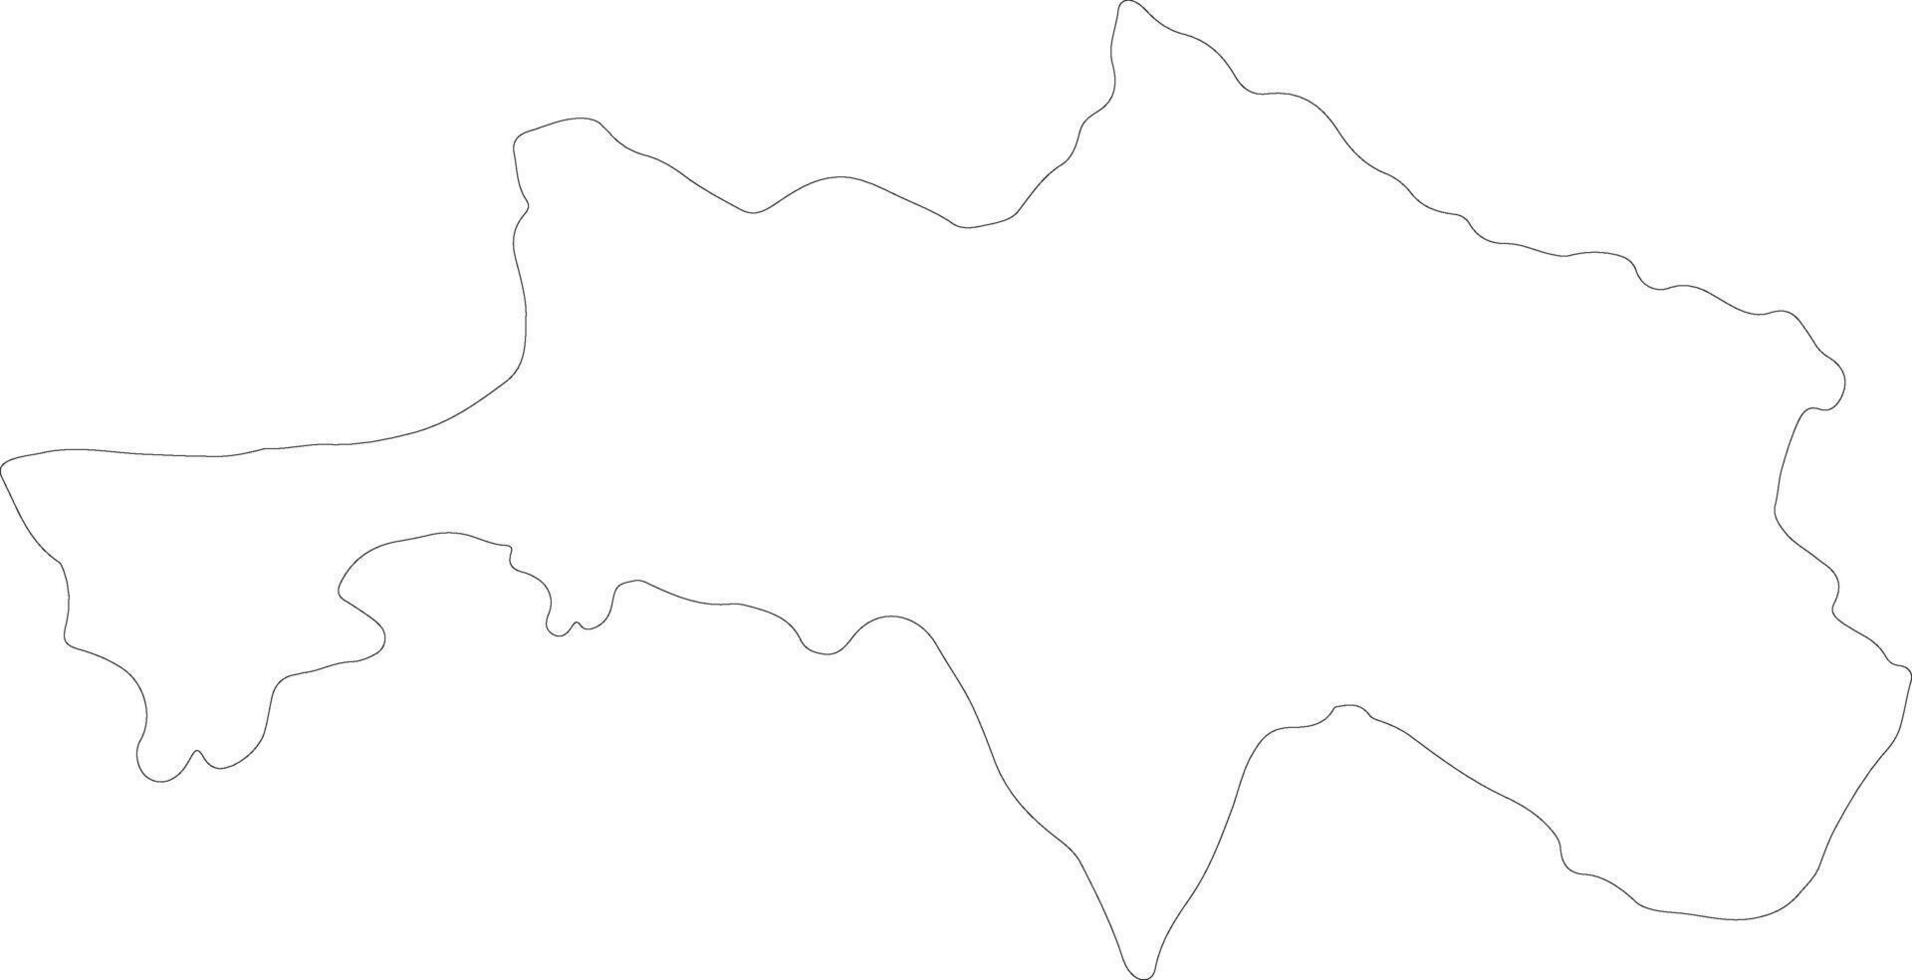 Bolikhamxai Laos outline map vector